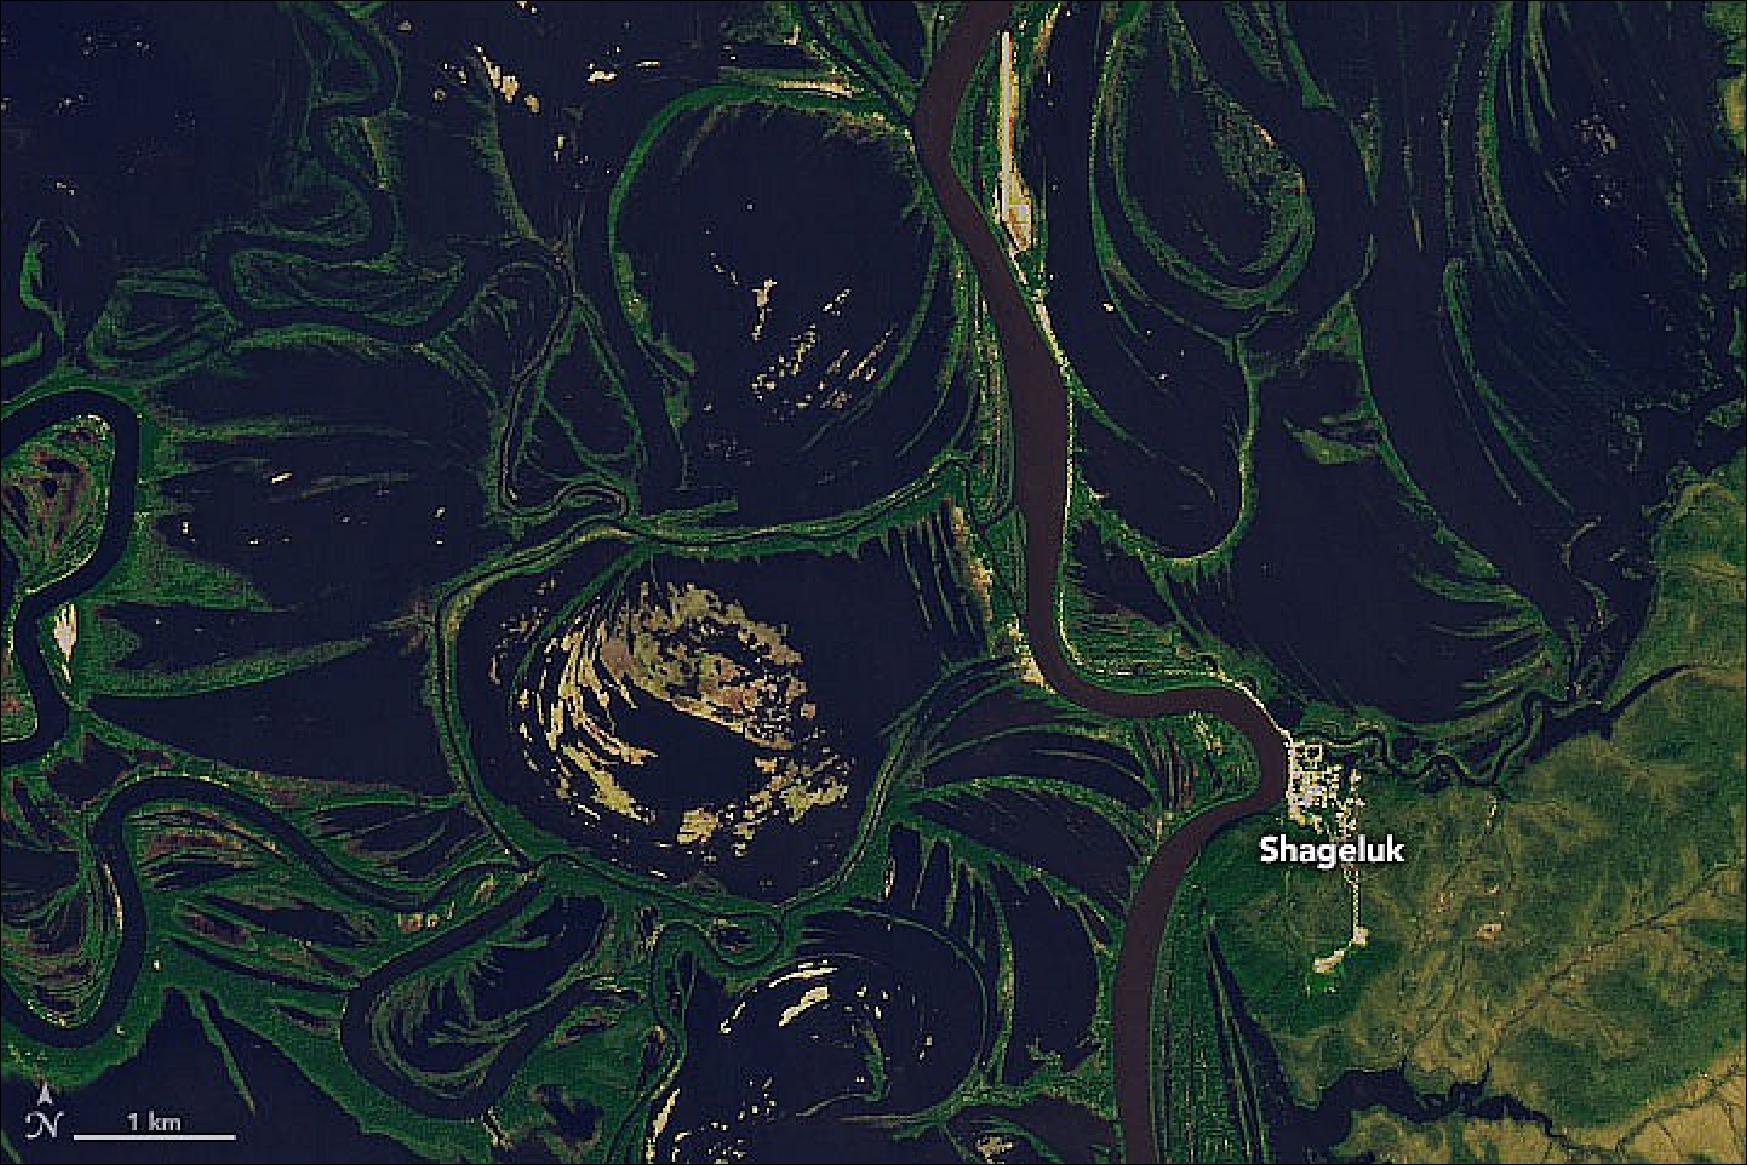 Figure 23: Detail image of the Shageluk region (image credit: NASA Earth Observatory)